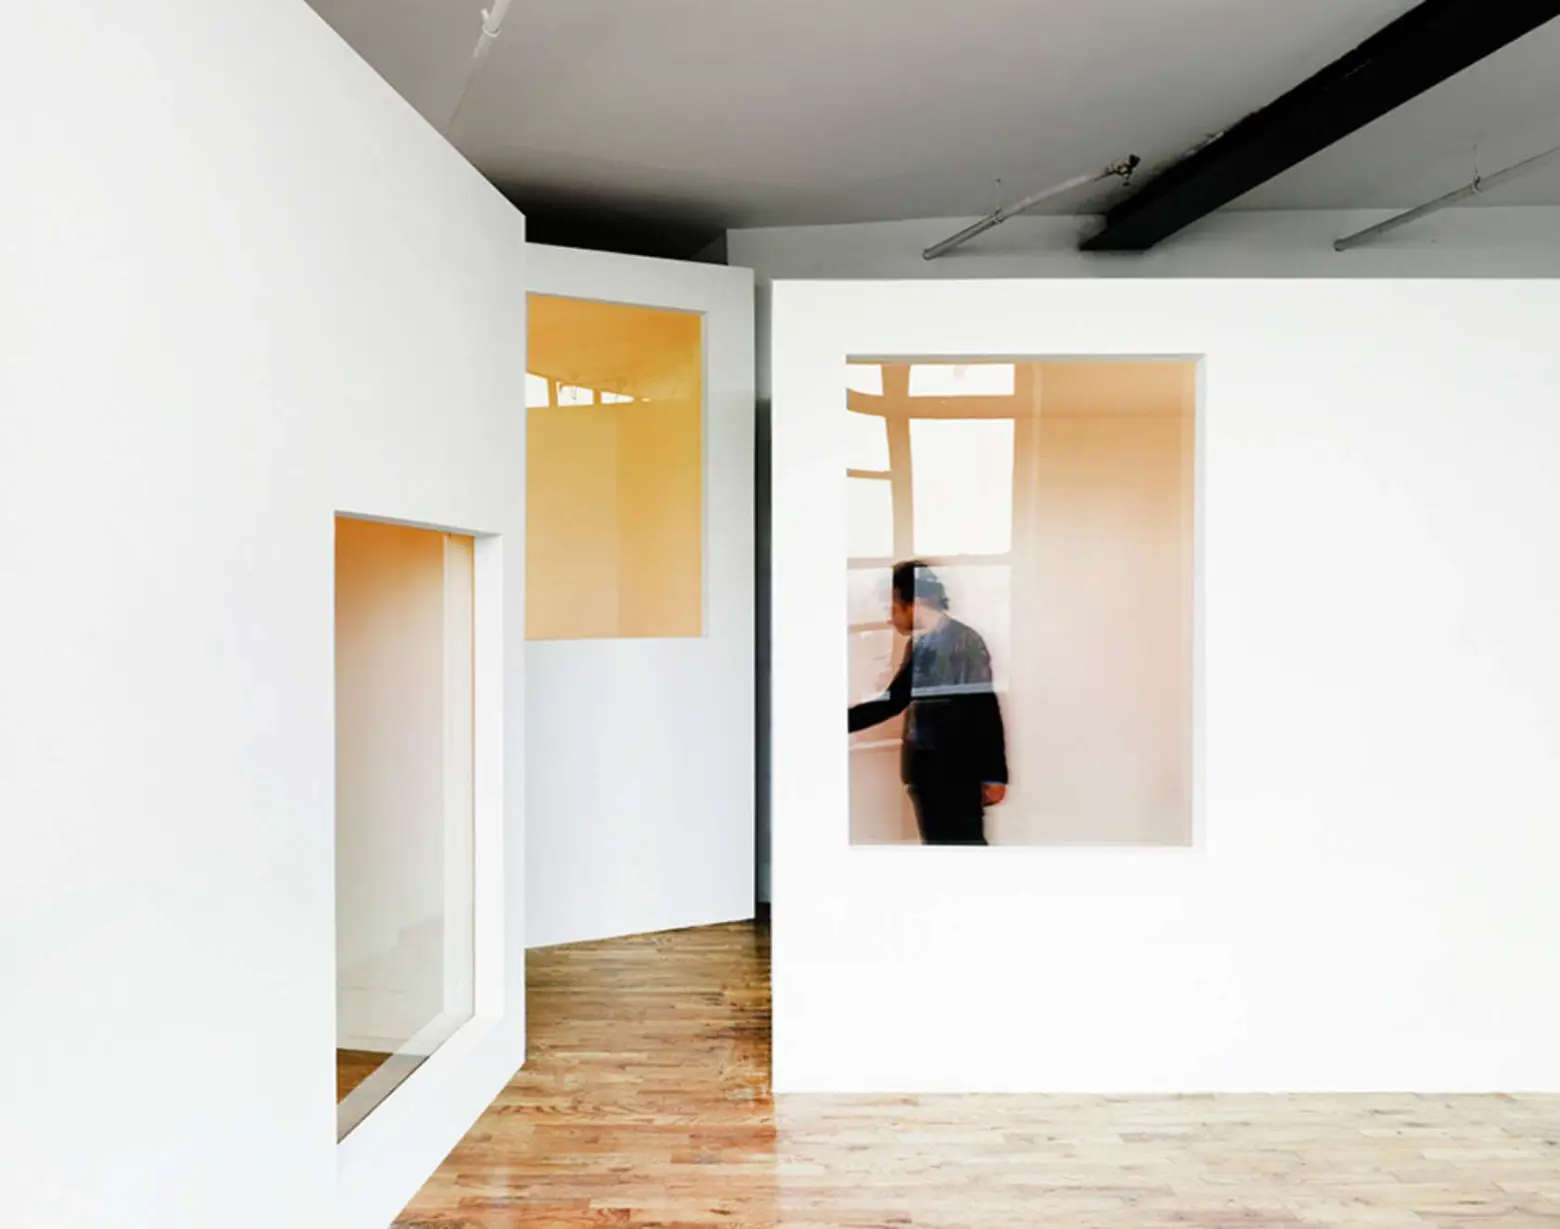 Studio Cadena Turns a Cramped 600 Square Foot Bushwick Loft Into a Three-Bedroom Artist Residence